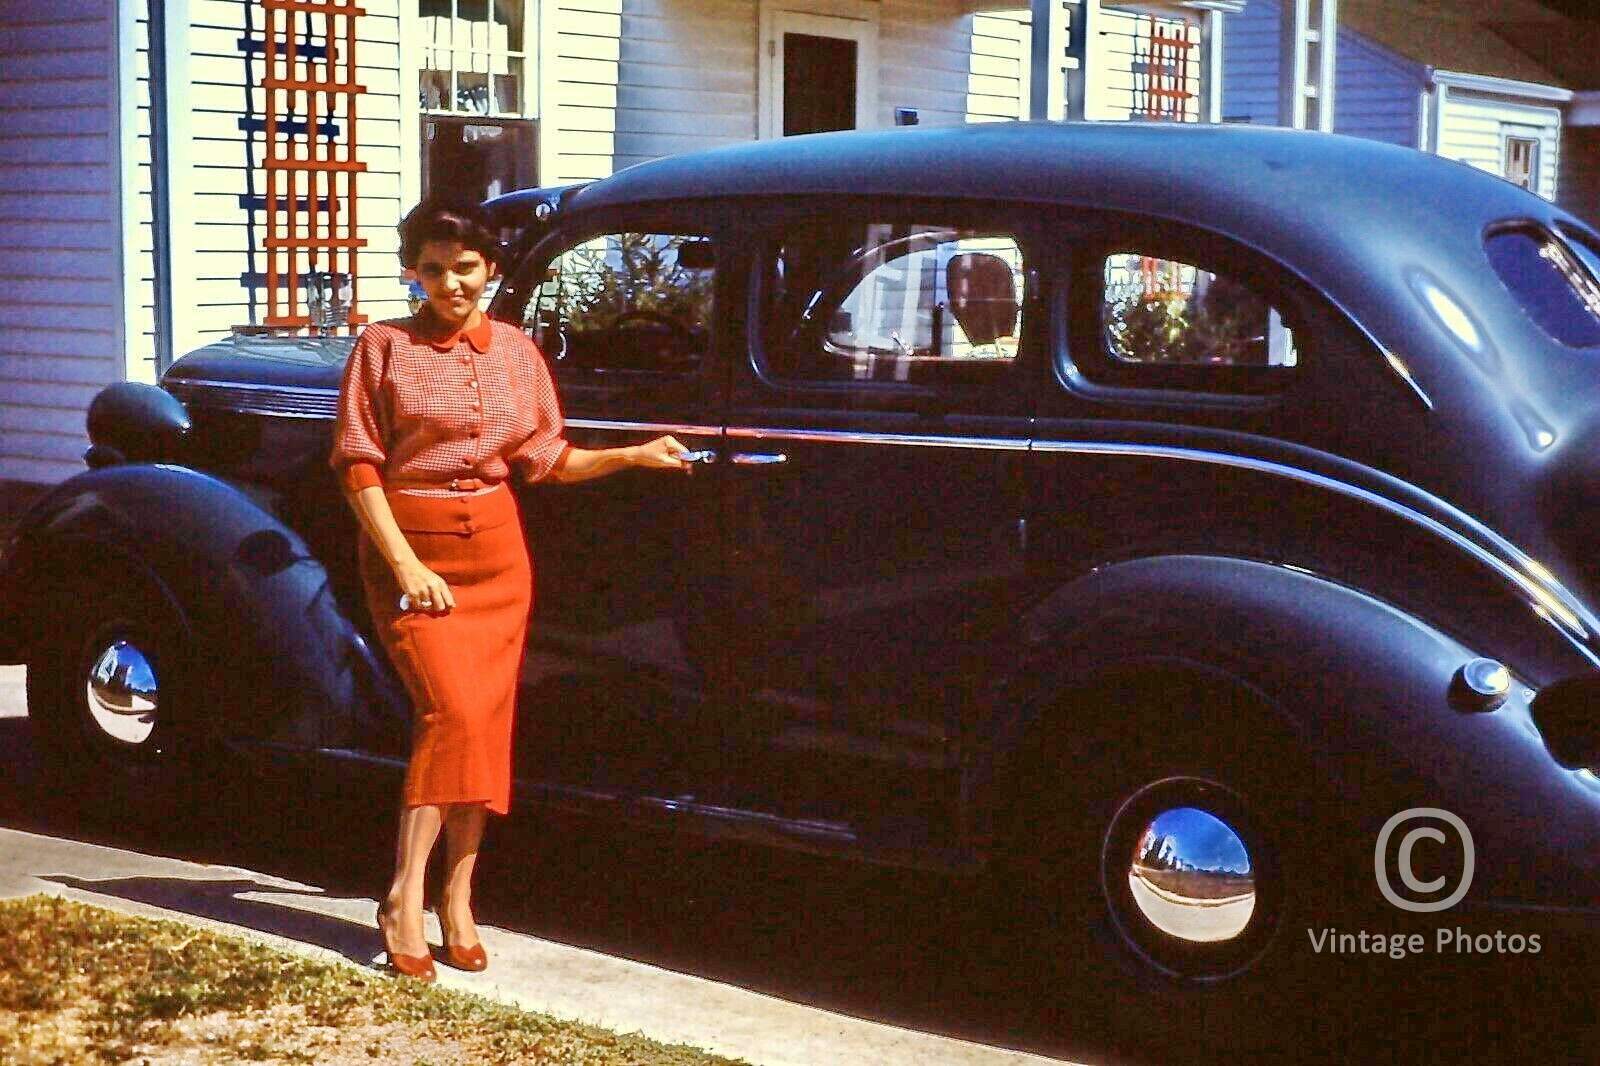 1950s Classic car in Driveway - Lady in Orange Dress